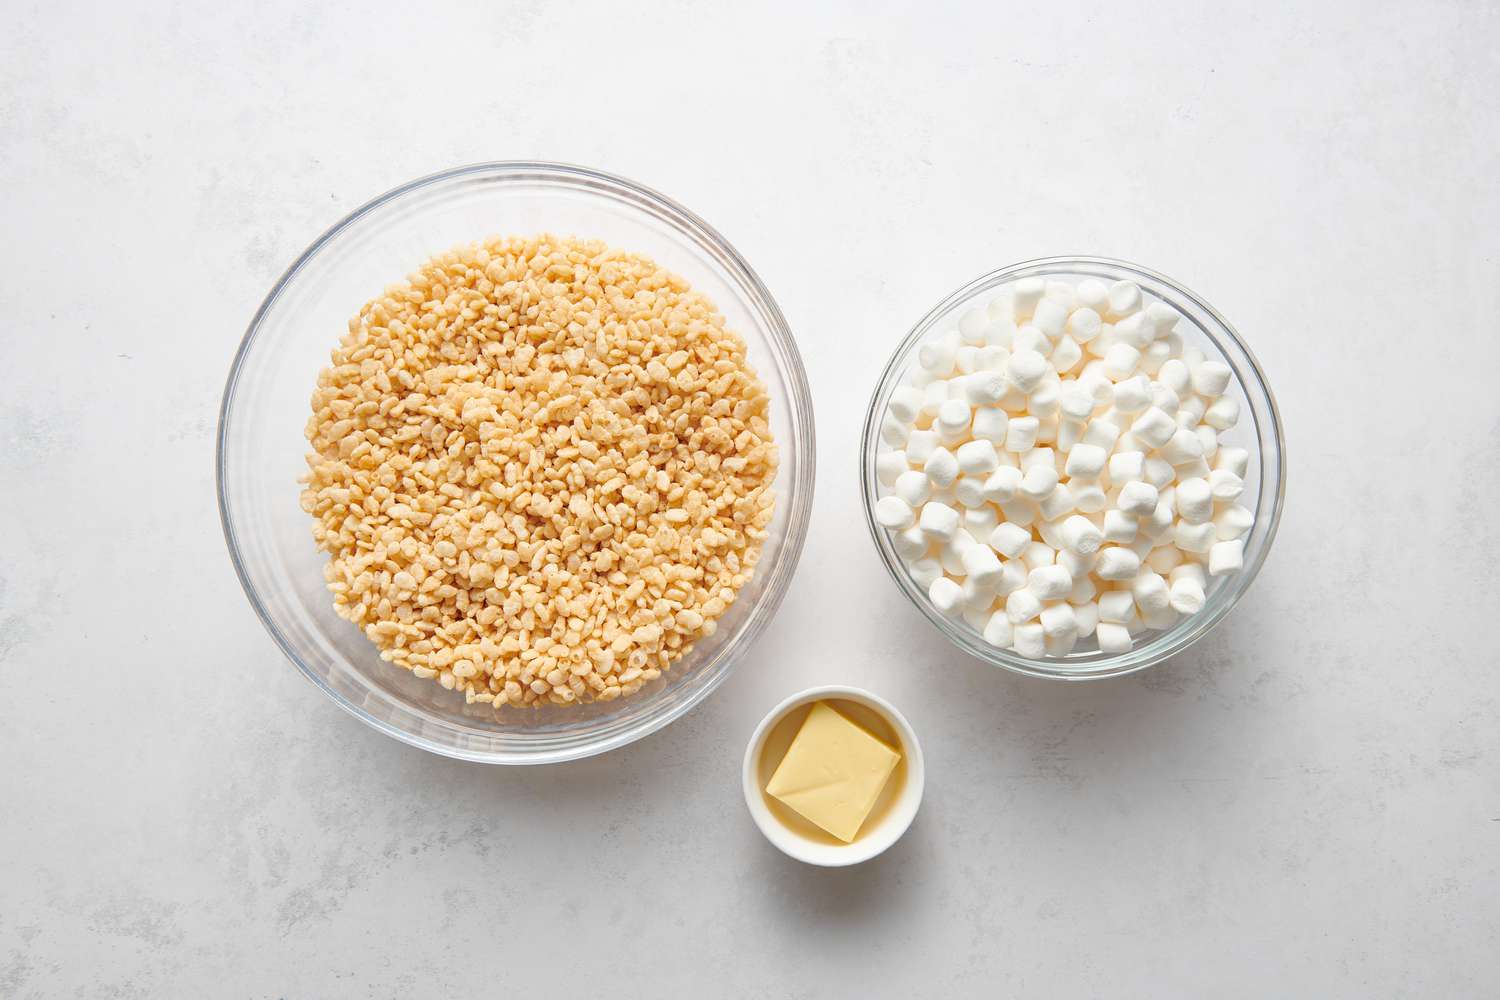 Ingredients to make rice crispy treats